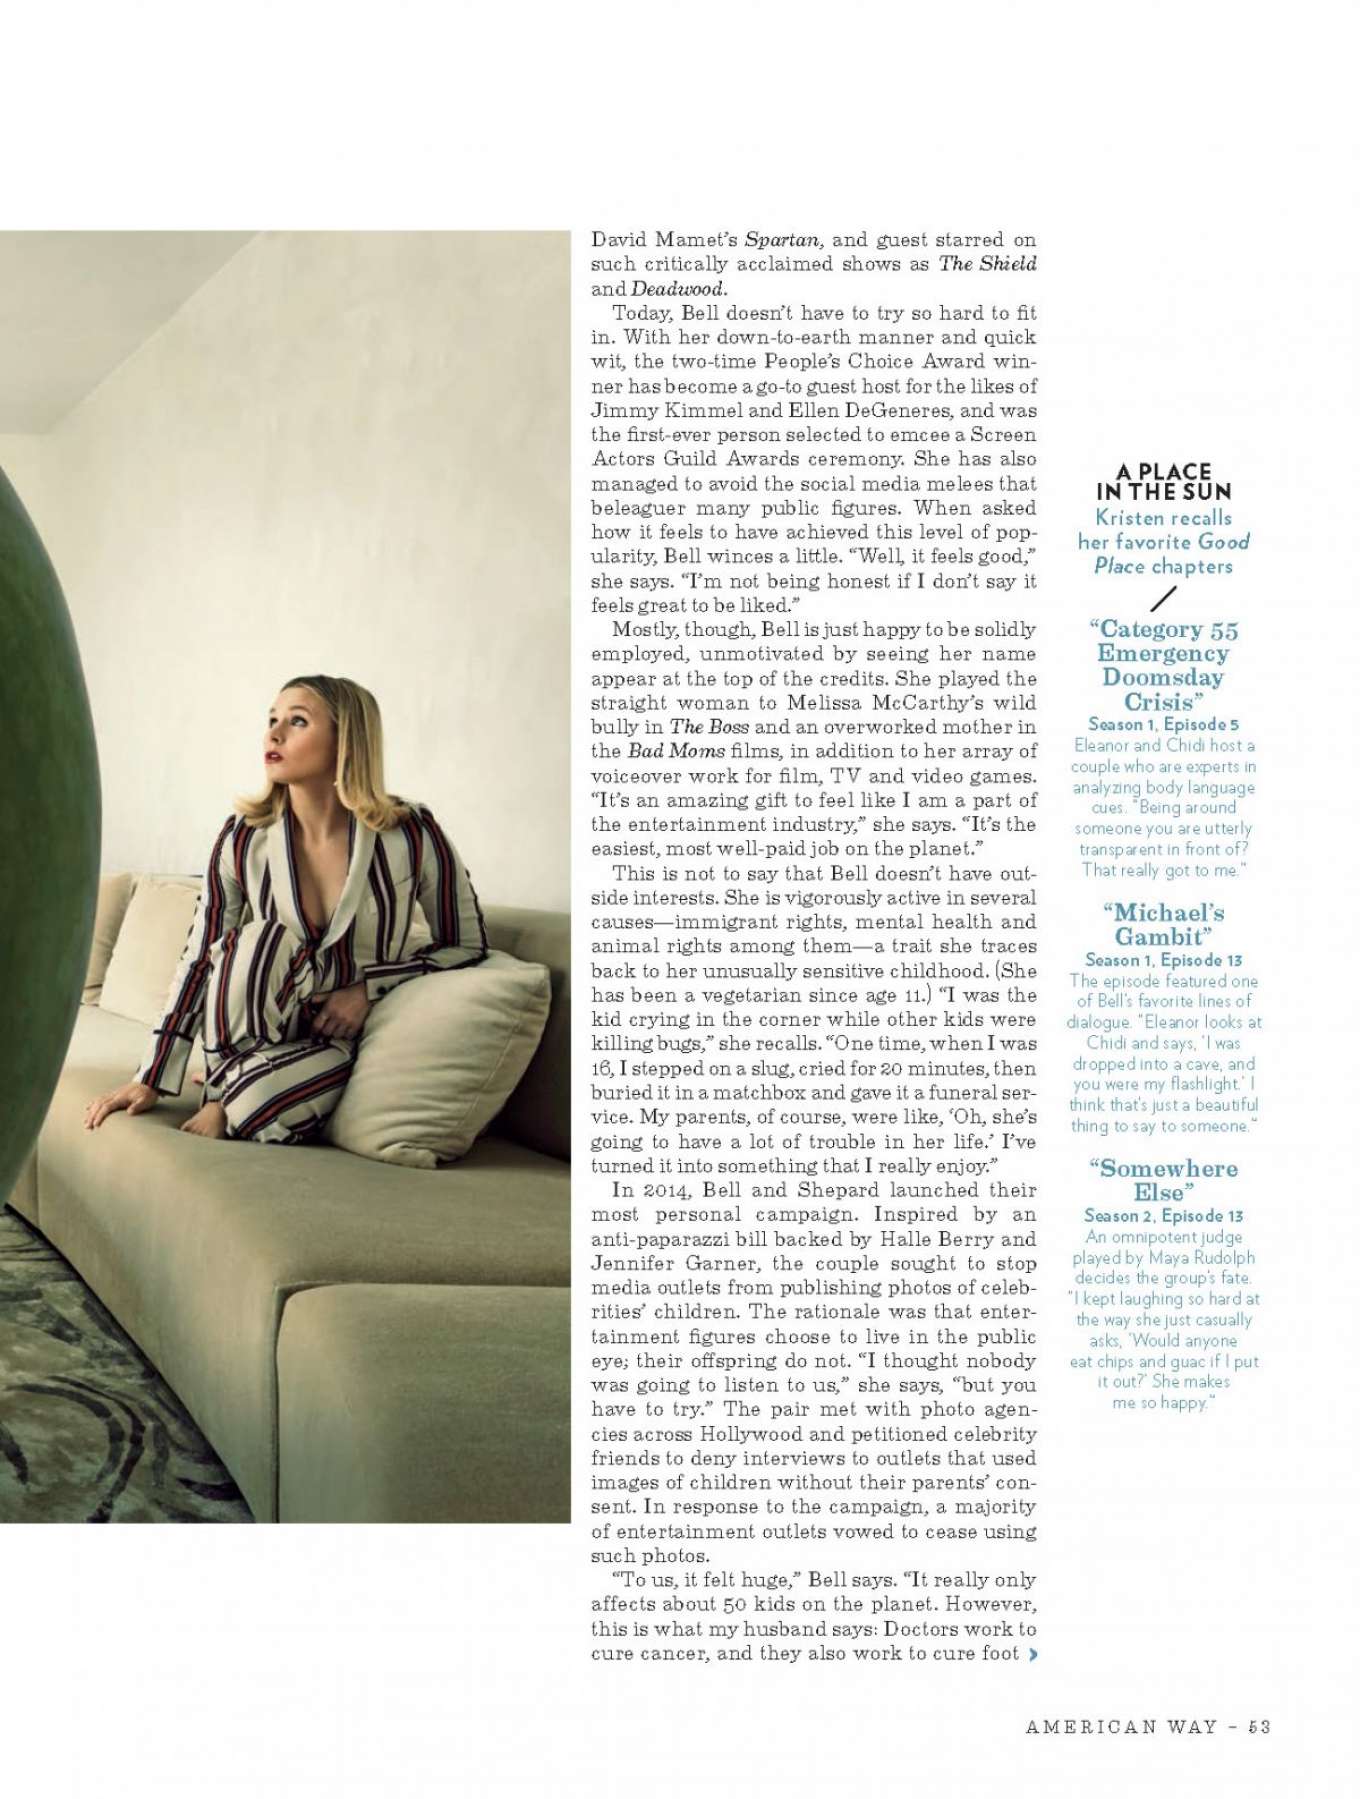 Kristen Bell â€“ American Way Magazine (September 2018issue)